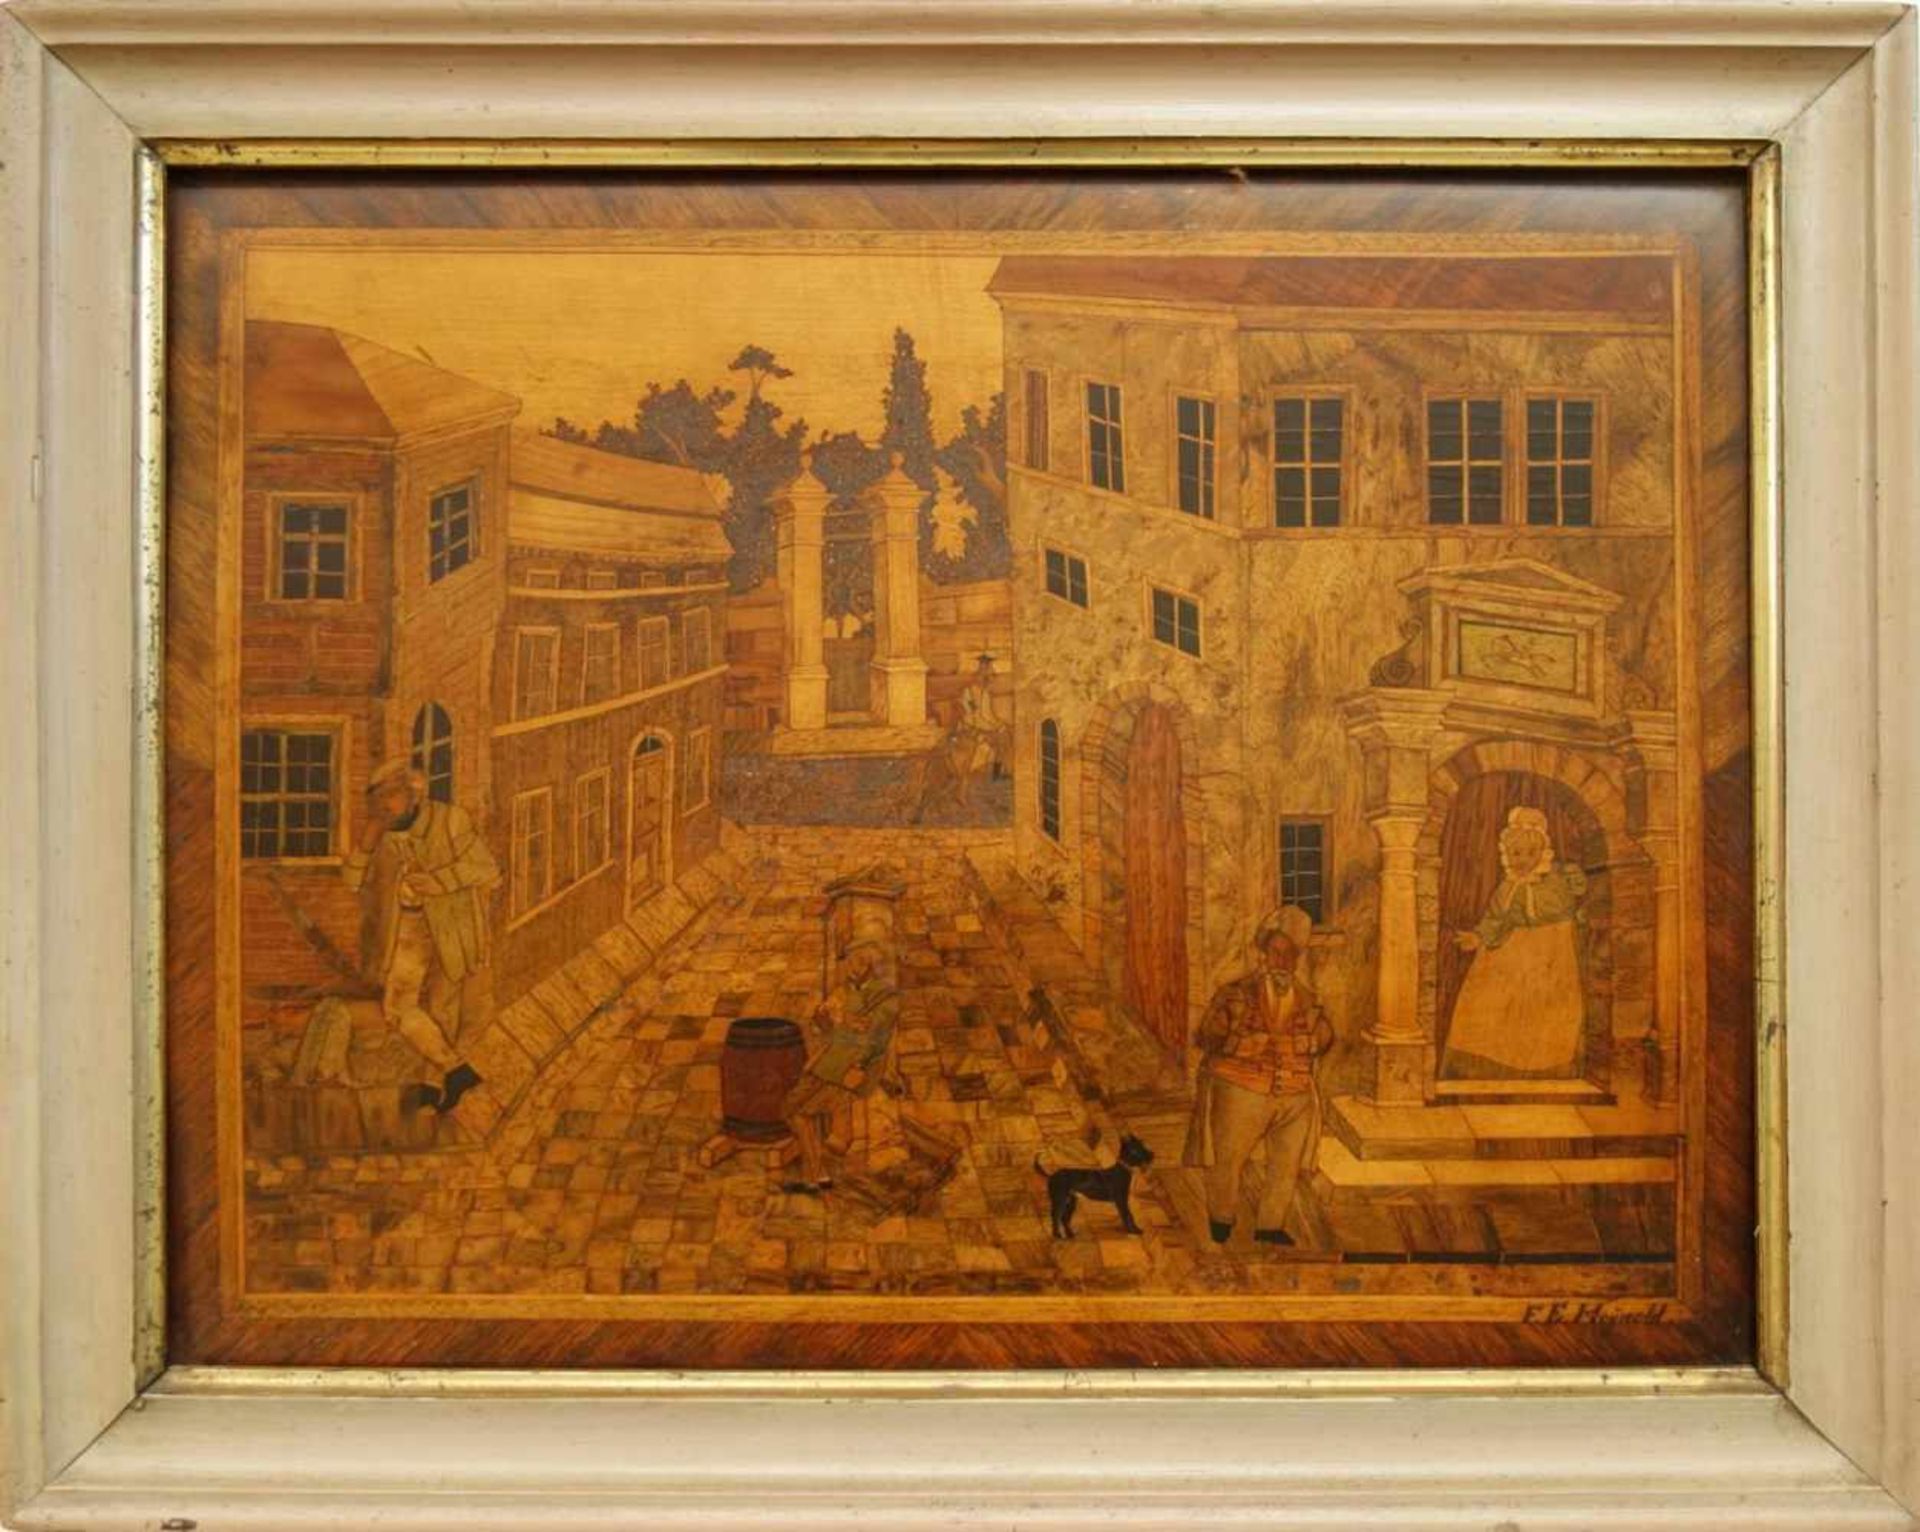 Heynold, F.E., Intarsienbild, wohl Leipzig, Anf. 19. Jh.Barocke Architektur mit Personenstaffage,